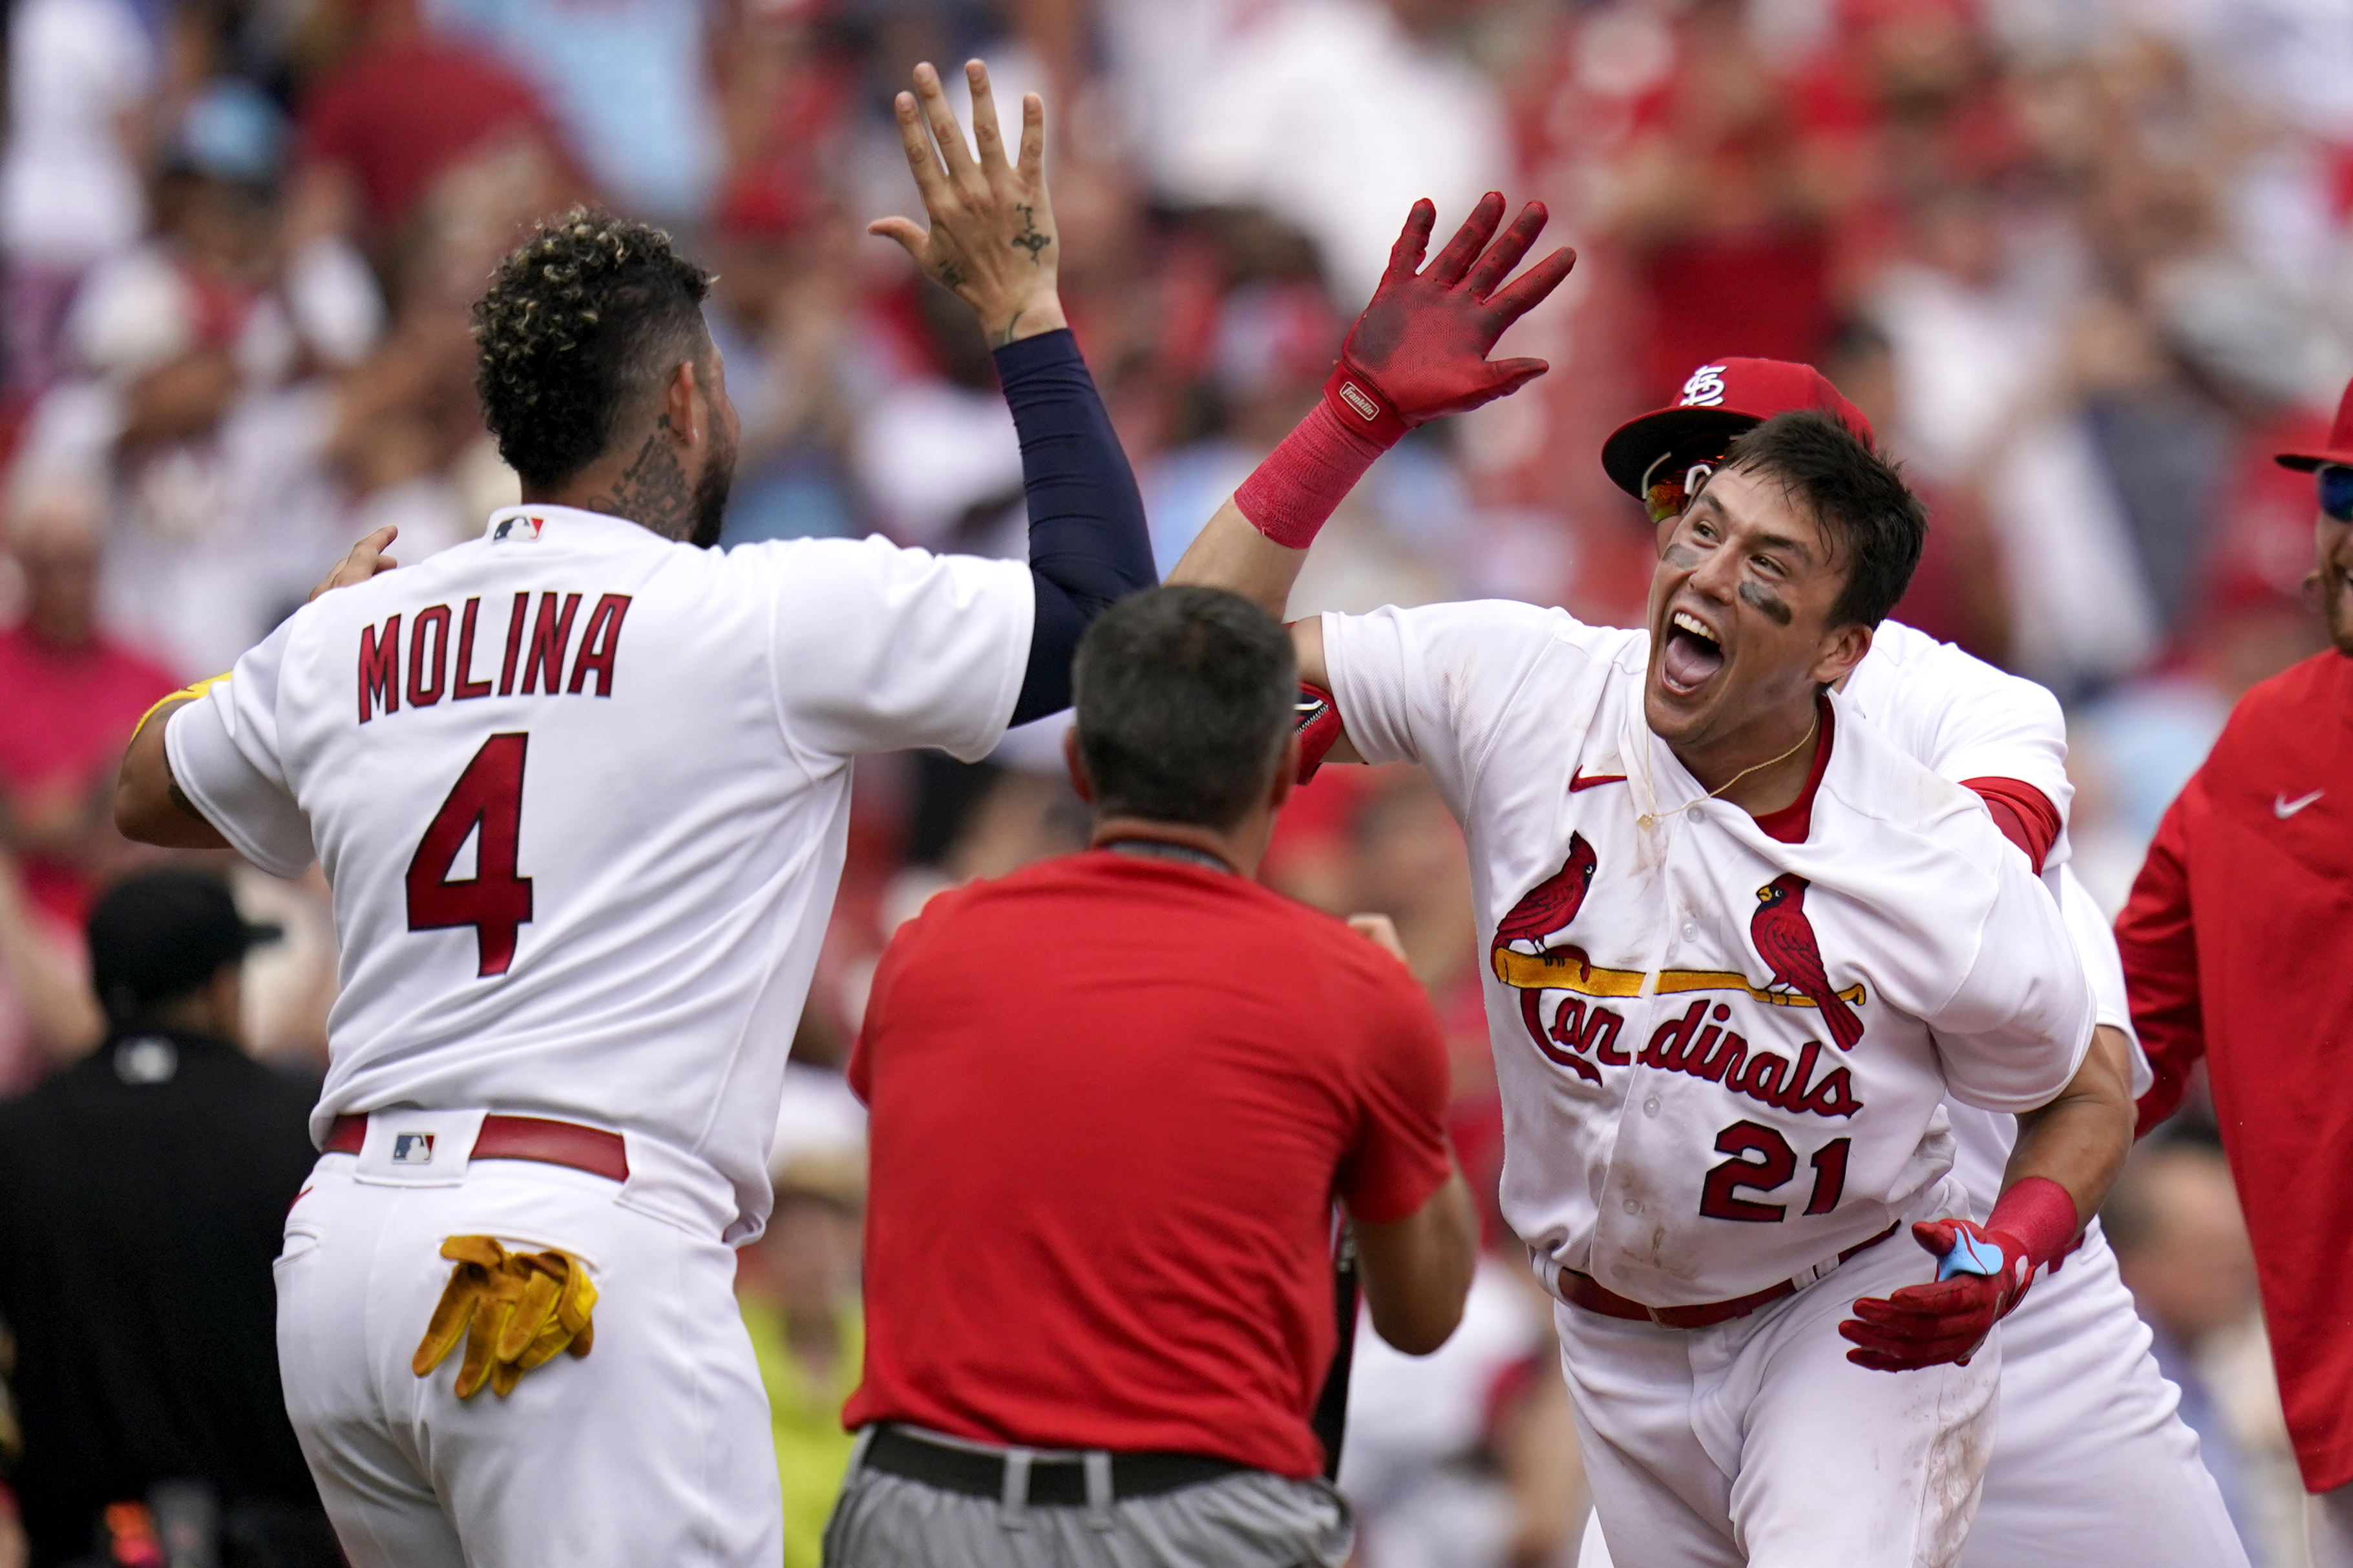 Nootbaar's game-ending single lifts Cardinals over Cubs